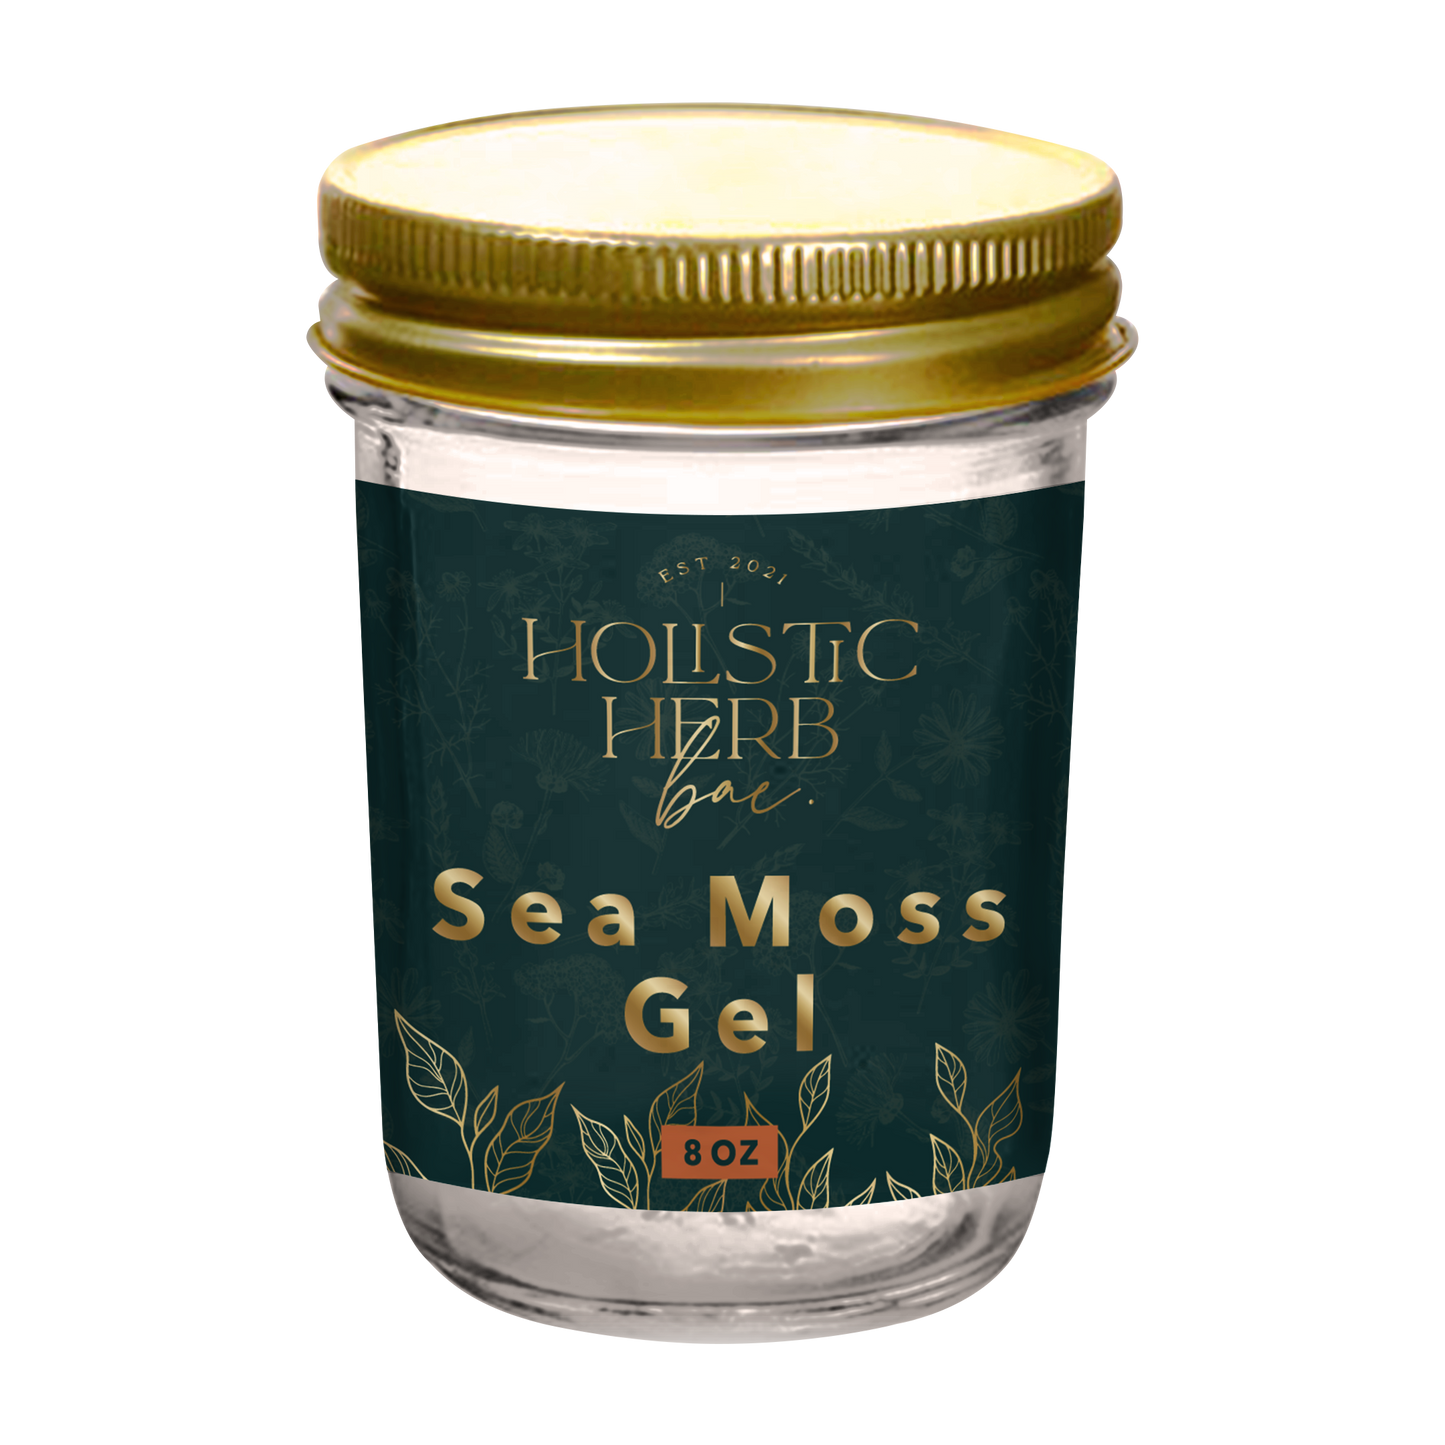 Gold Sea Moss Gel